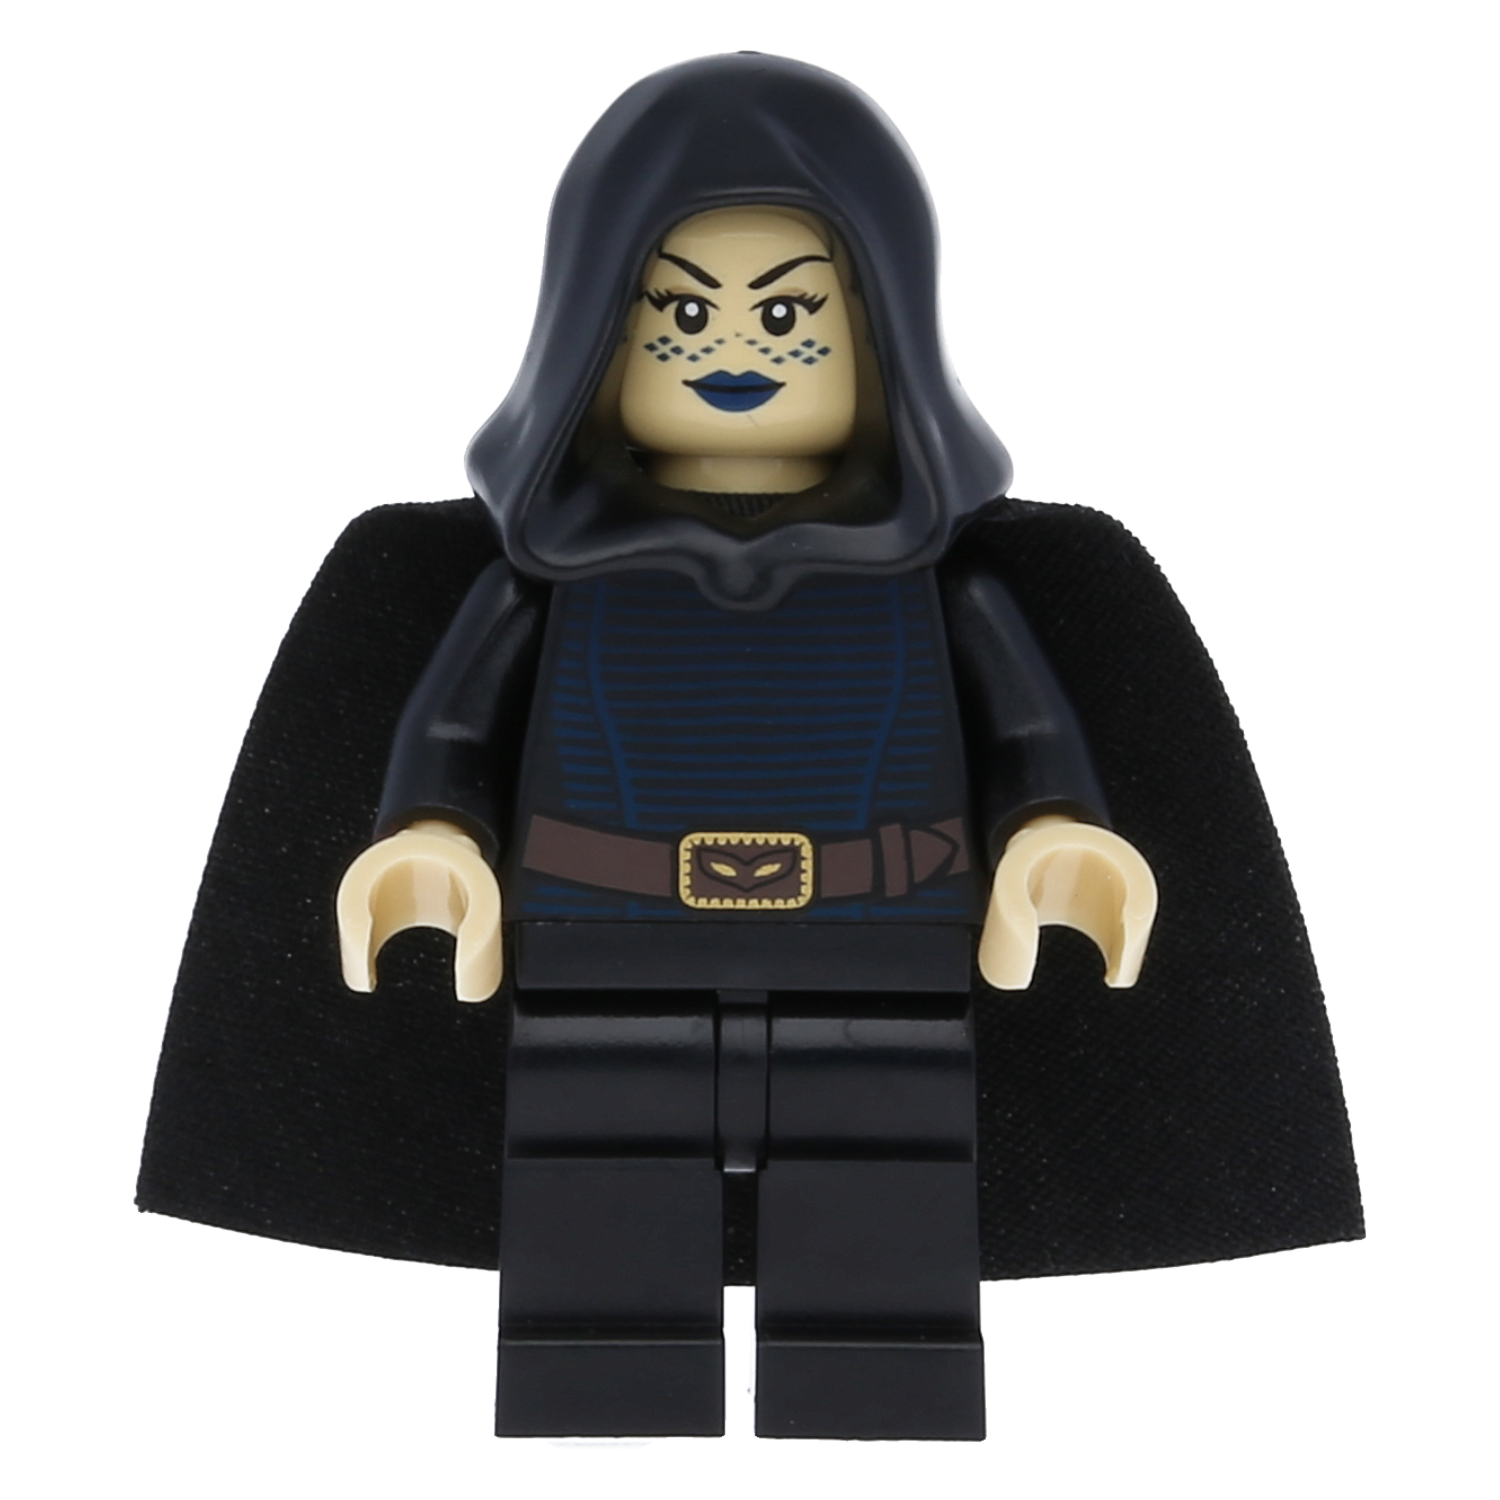 LEGO Star Wars Minifigure - Barriss Offee (Black Hood)